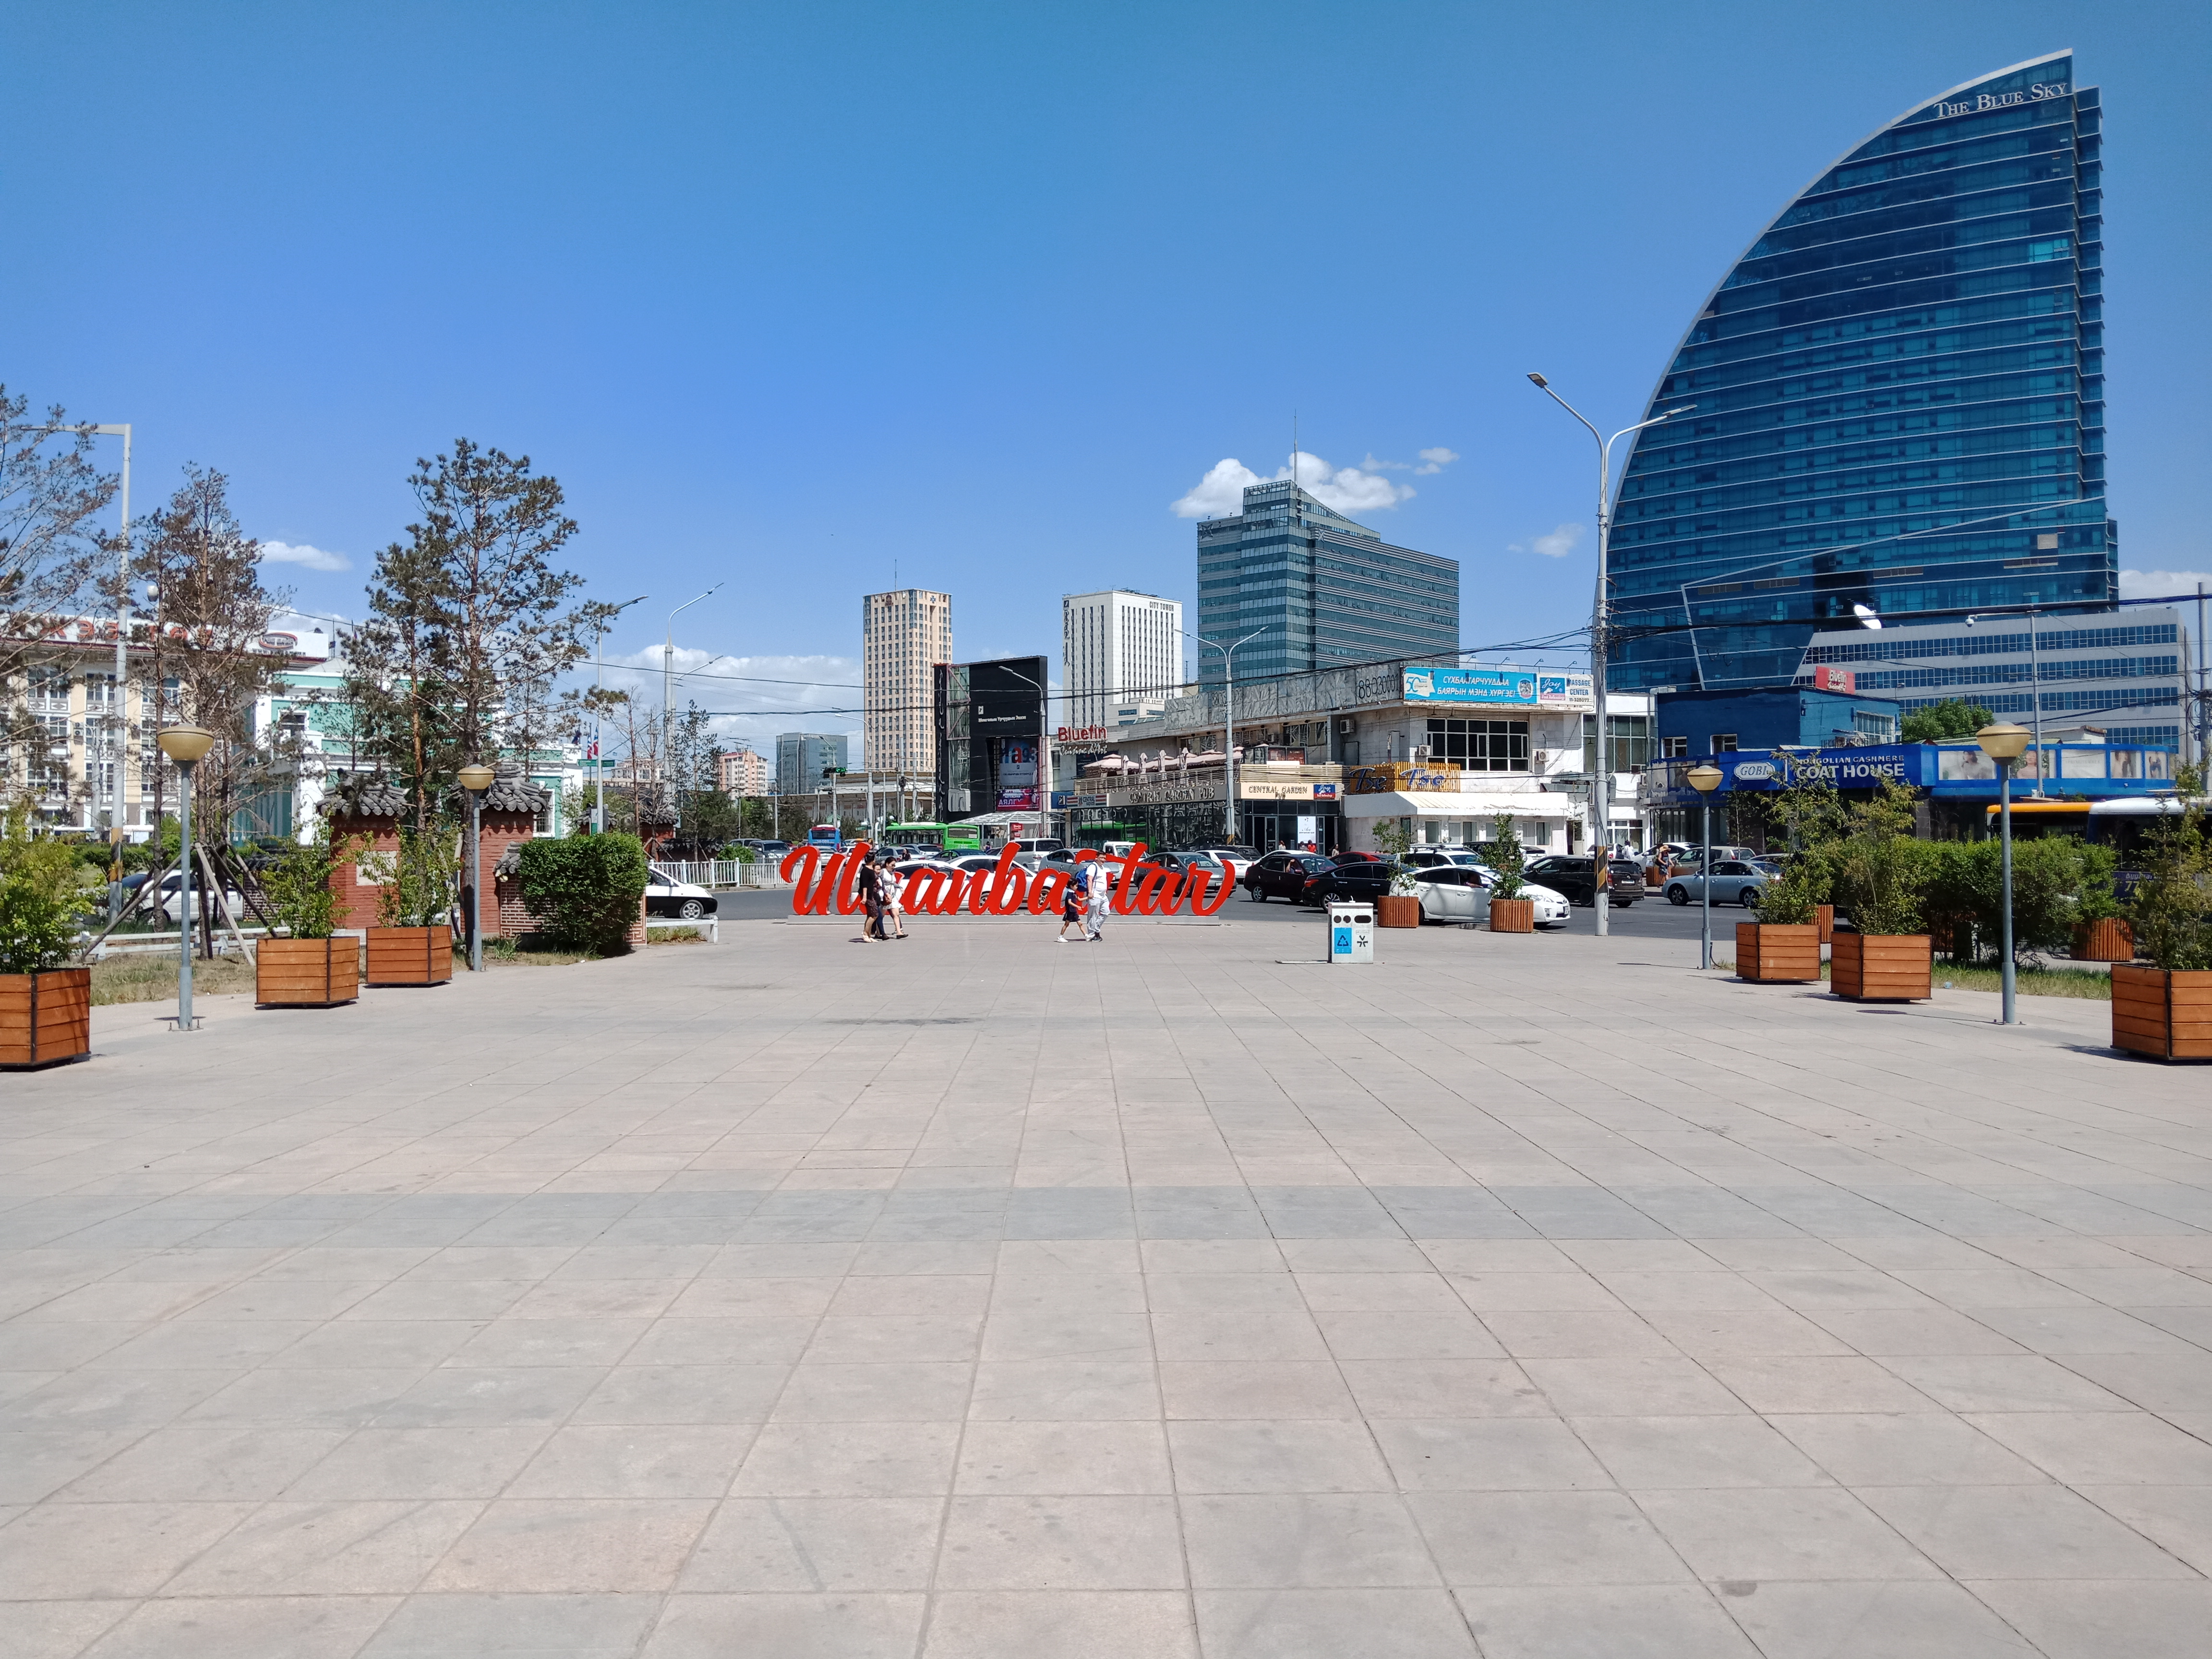 Mongolia, Ulan Bator, Sukhbaatar square, Louis Vuitton shop